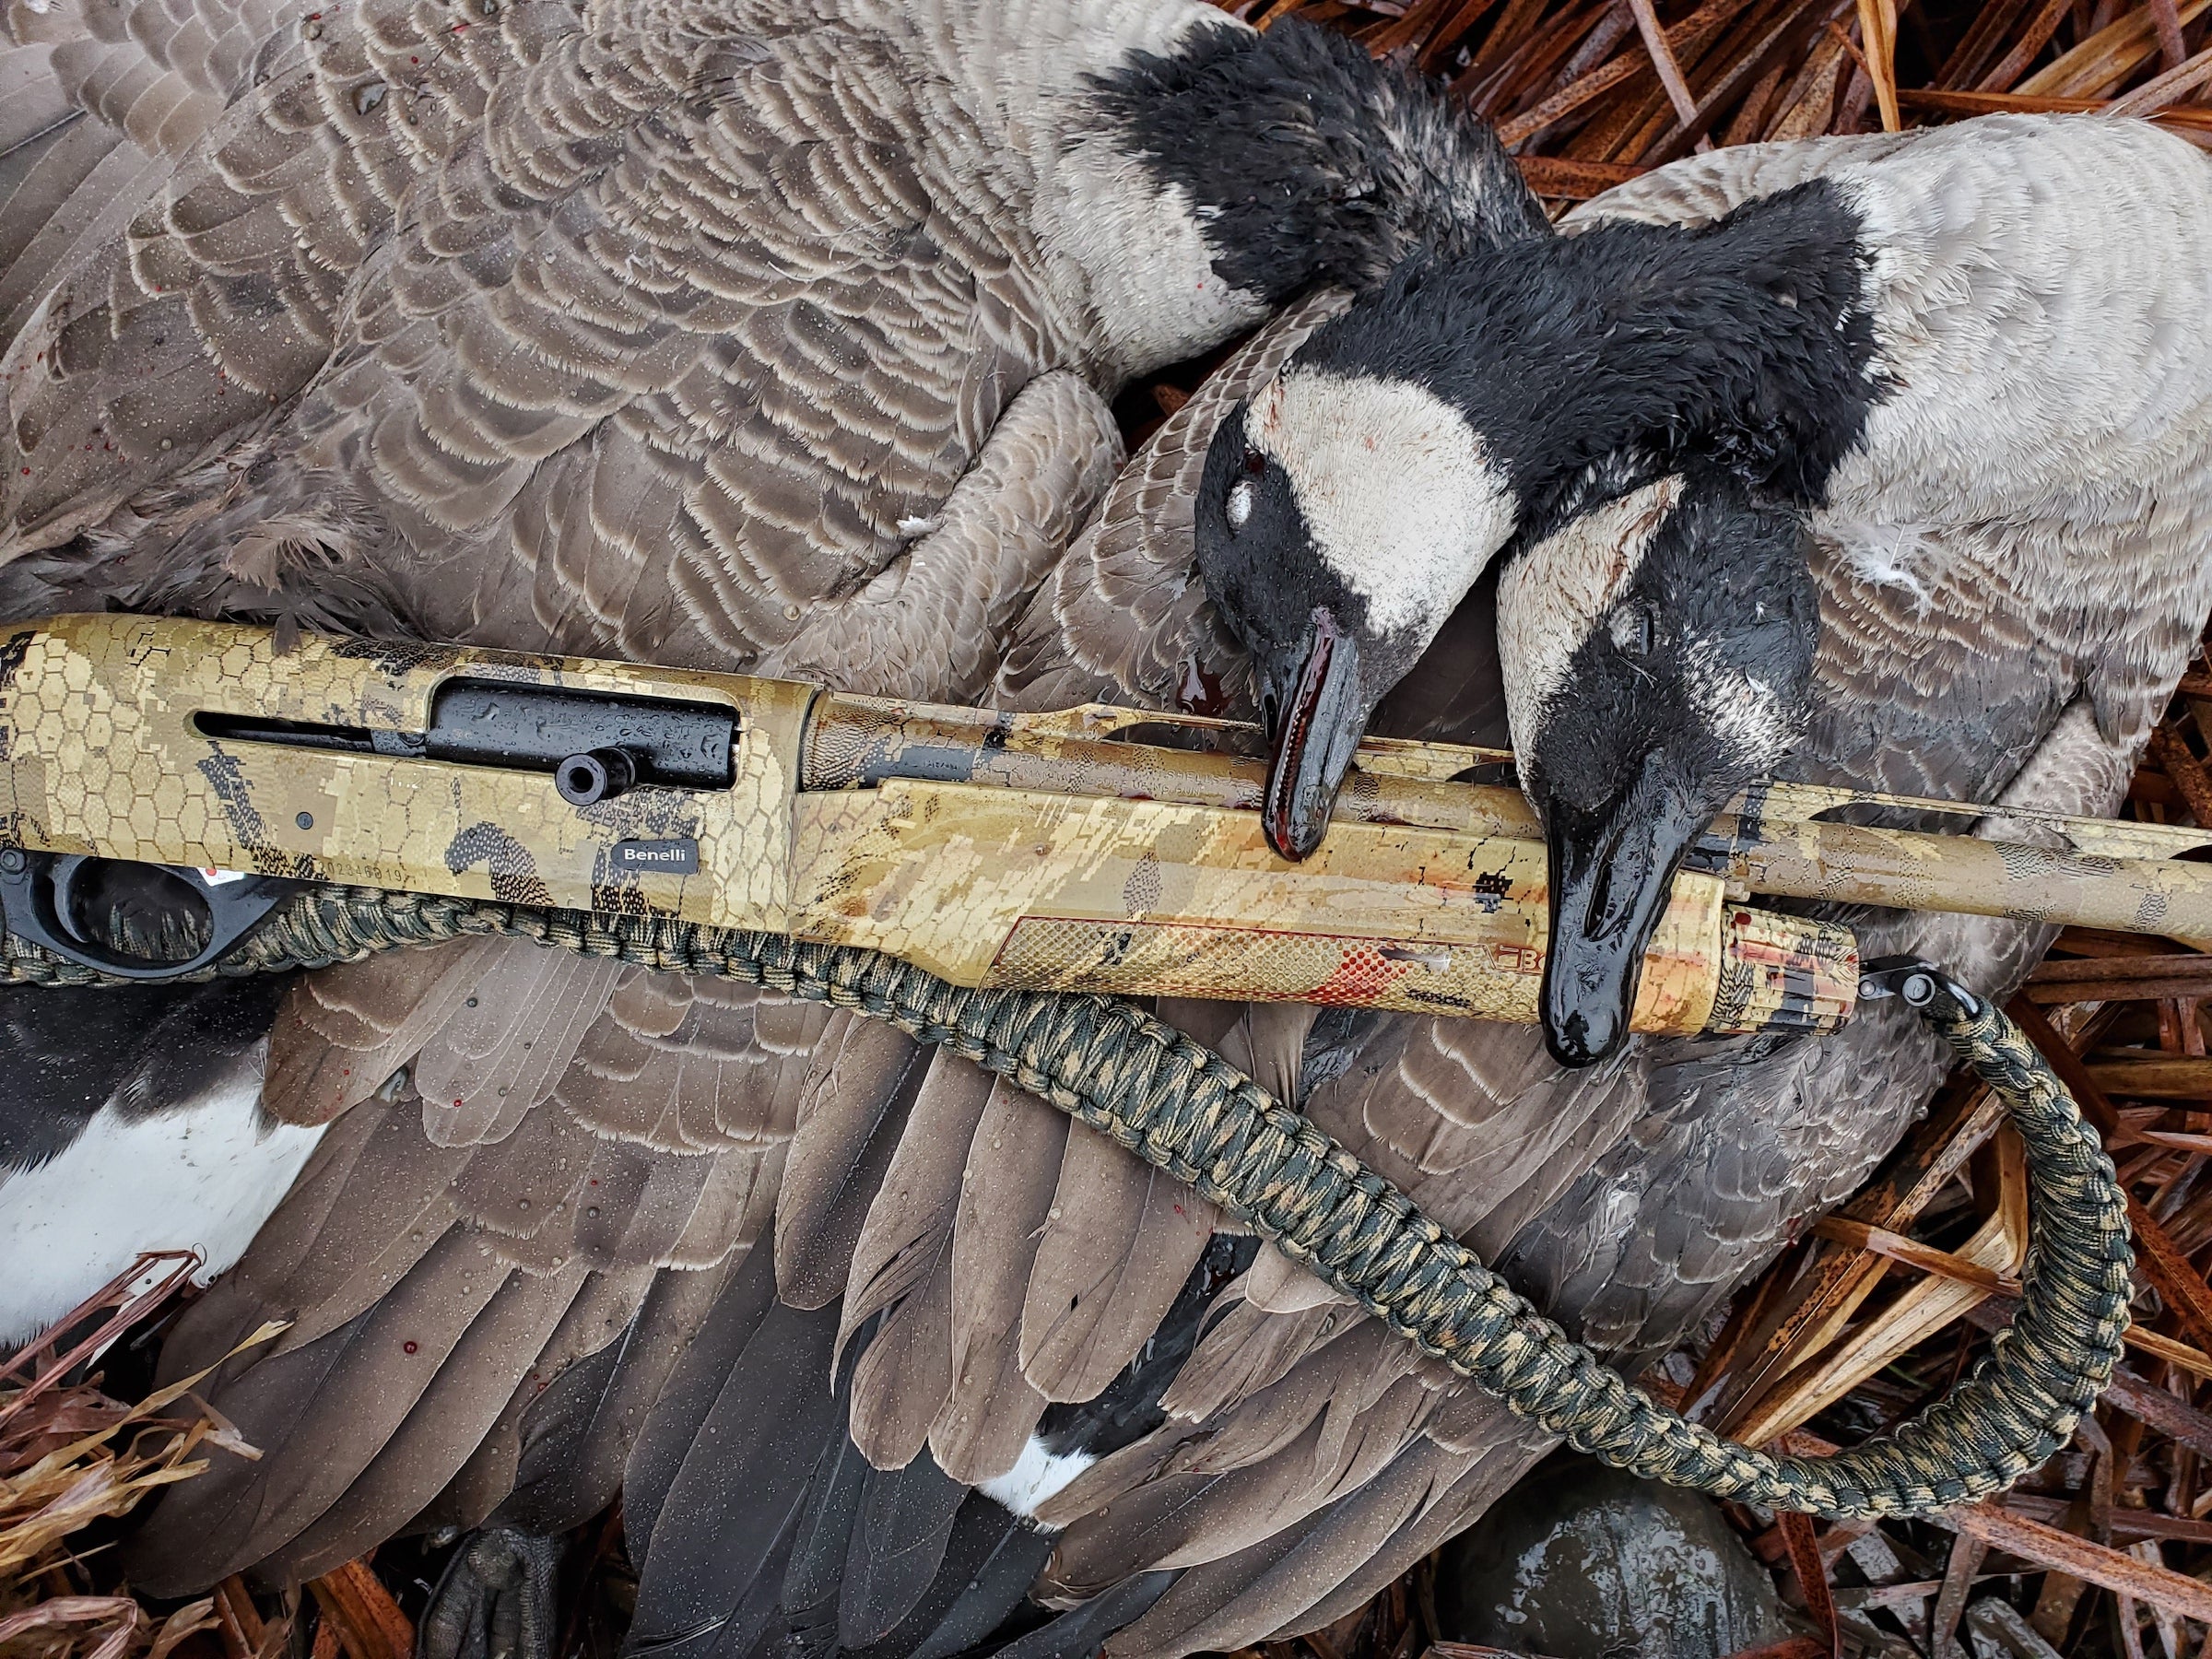 Geese next to a shotgun.